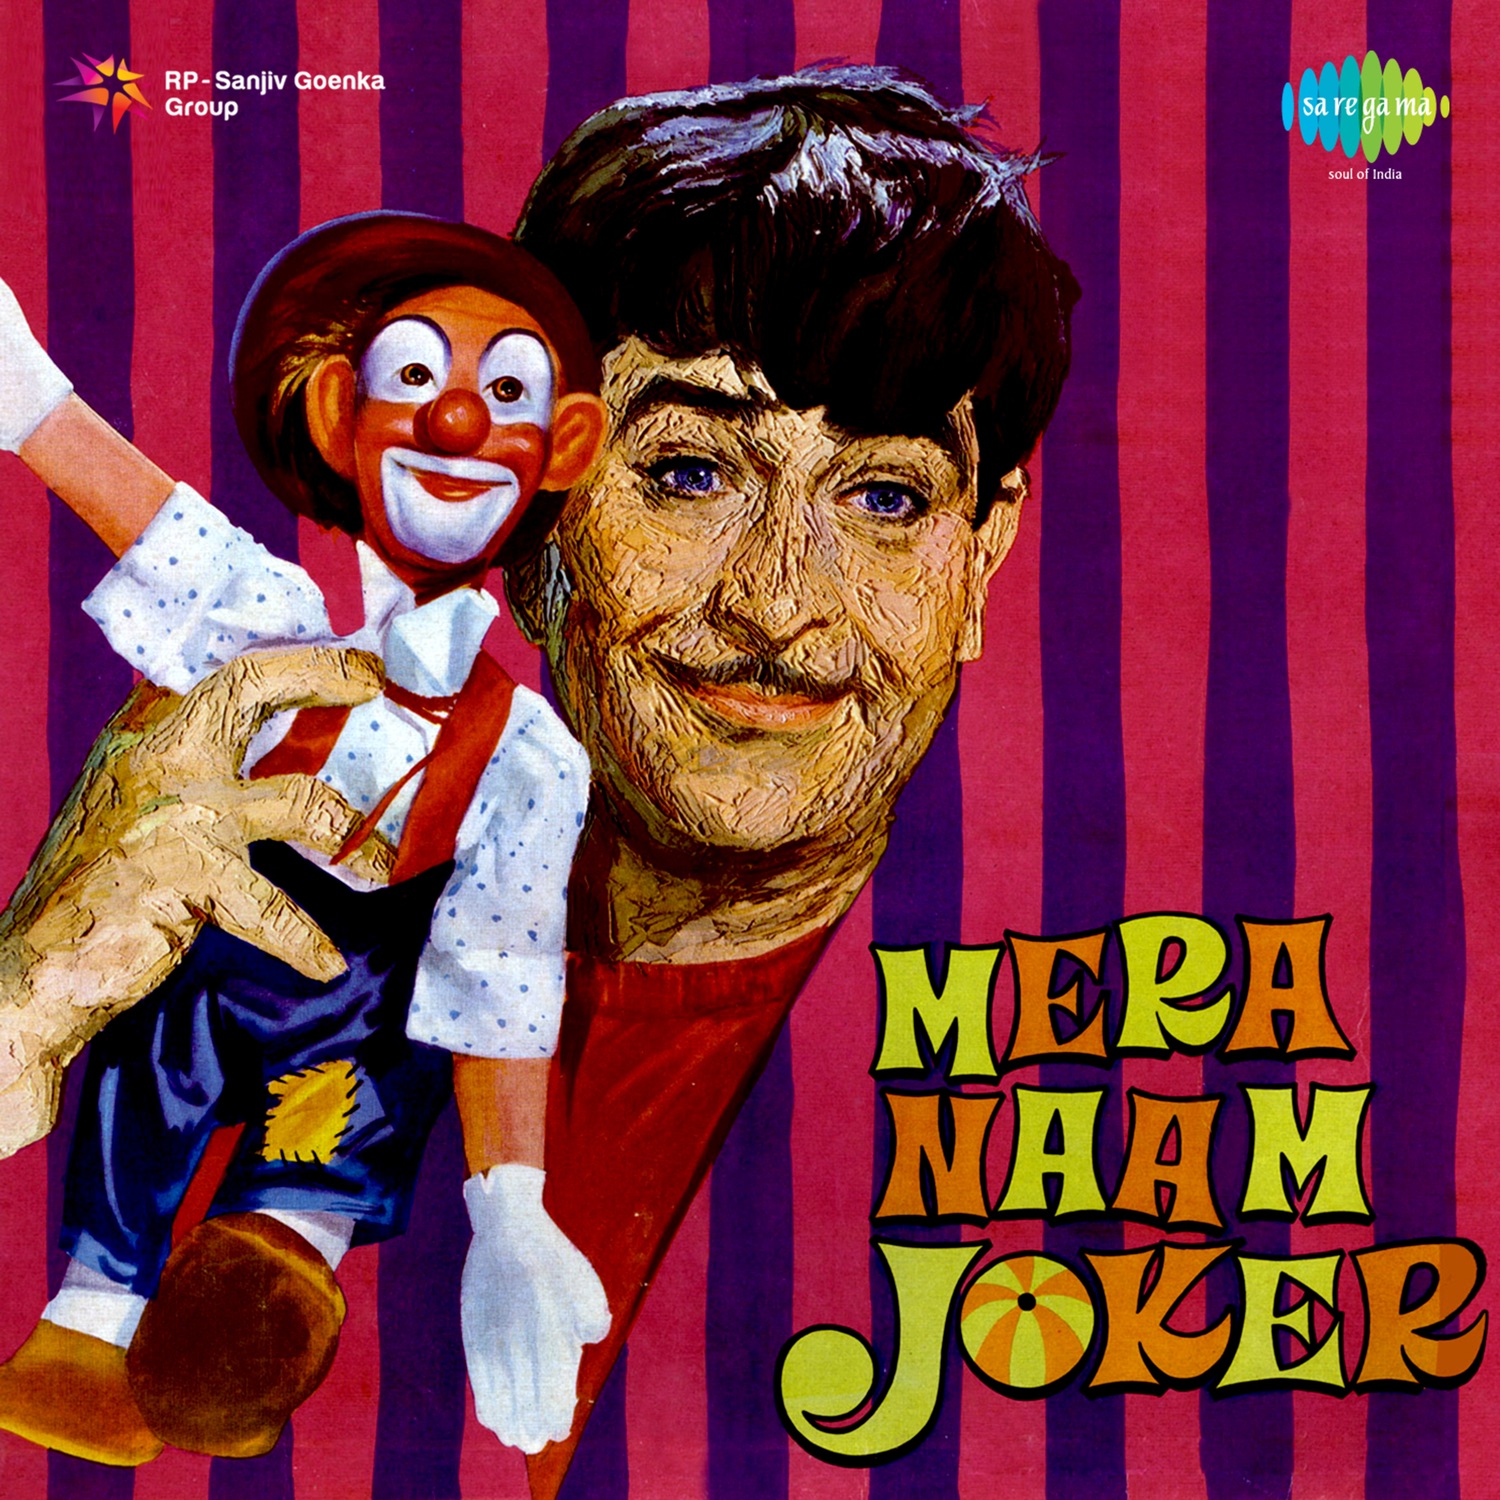 Songs from mera naam joker